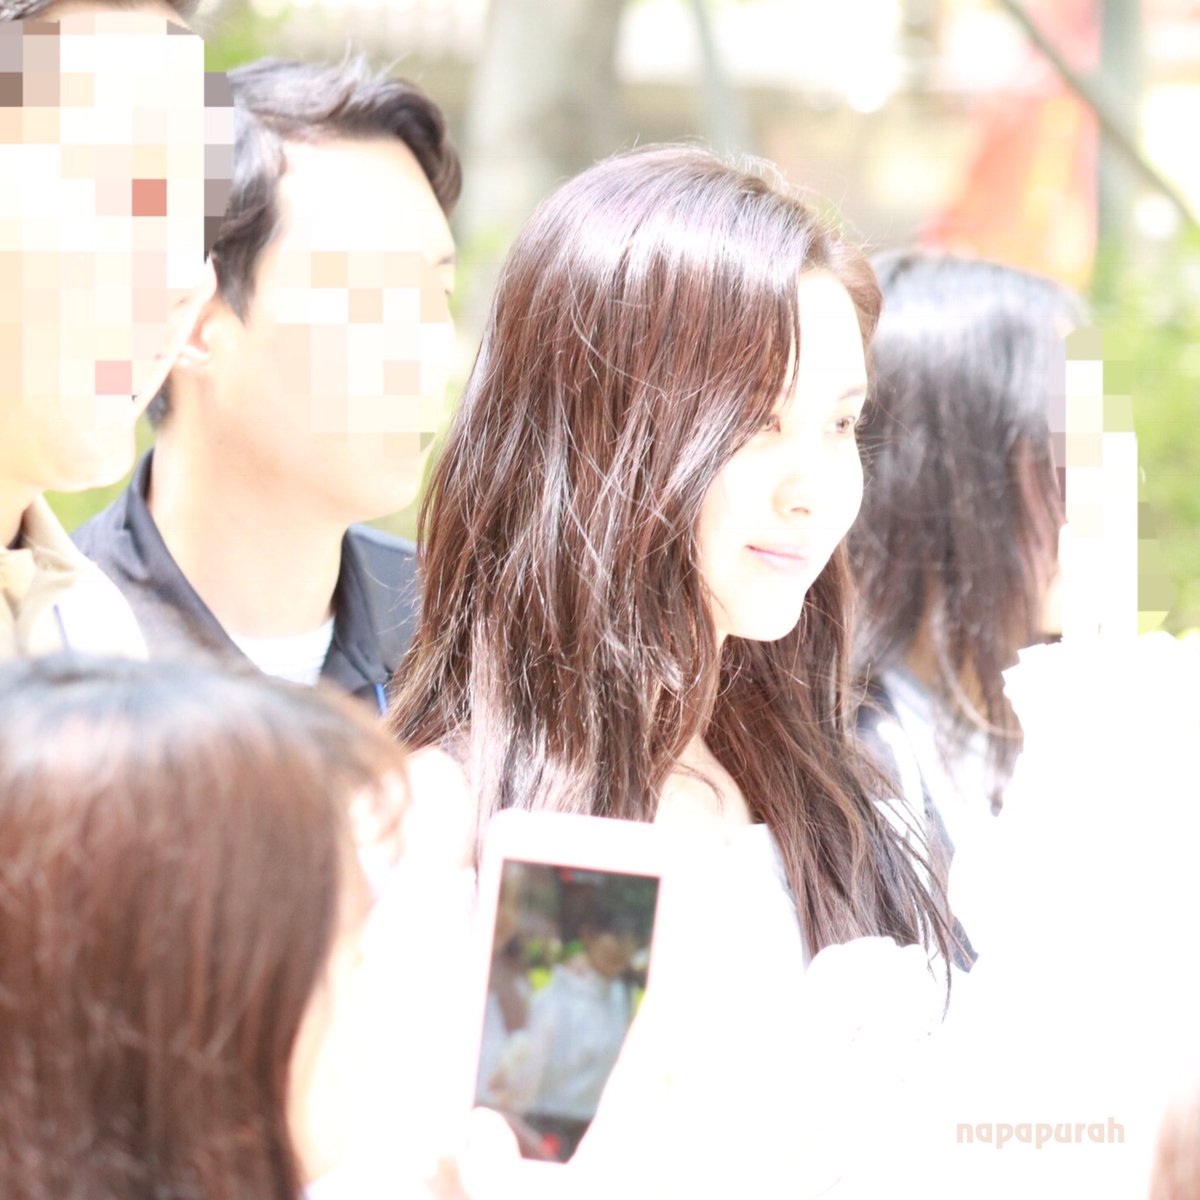  [PIC][03-06-2017]SeoHyun tham dự sự kiện “City Forestival - Maeil Duyou 'Confidence Diary'” vào chiều nay - Page 3 DBpErWgVwAAEUeJ